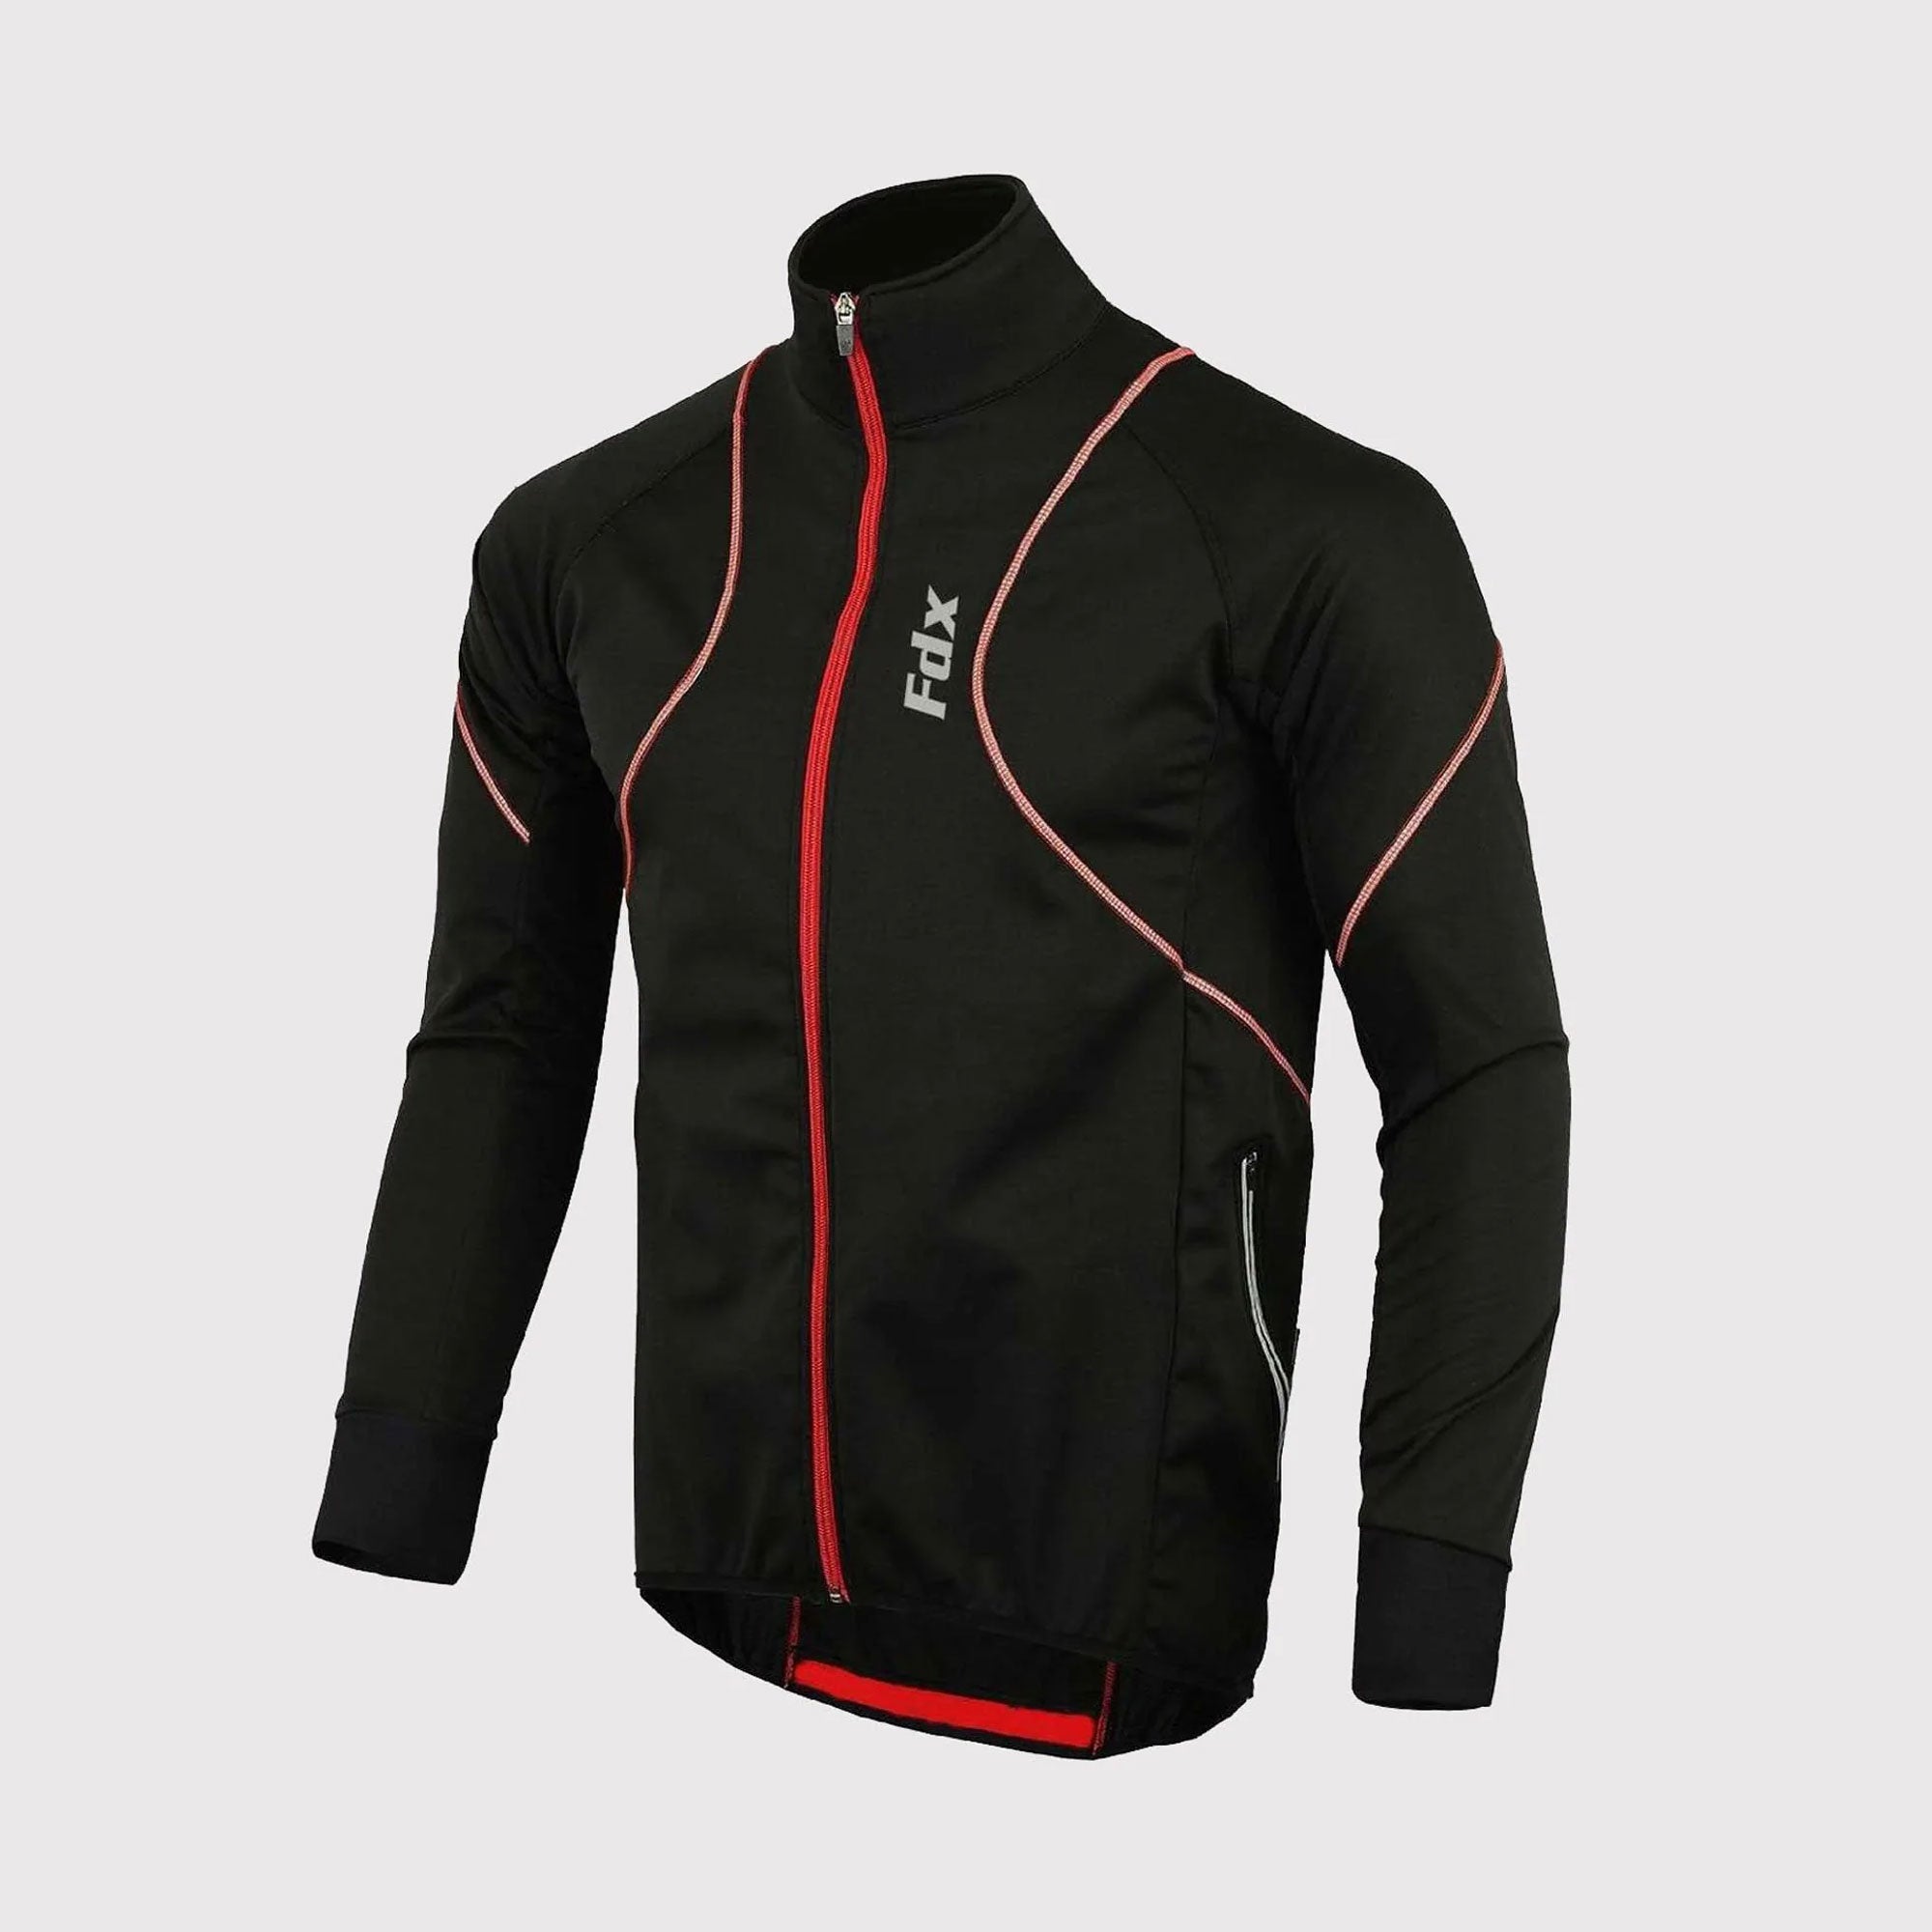 Fdx Gustt Red Men's Windproof Cycling Jacket